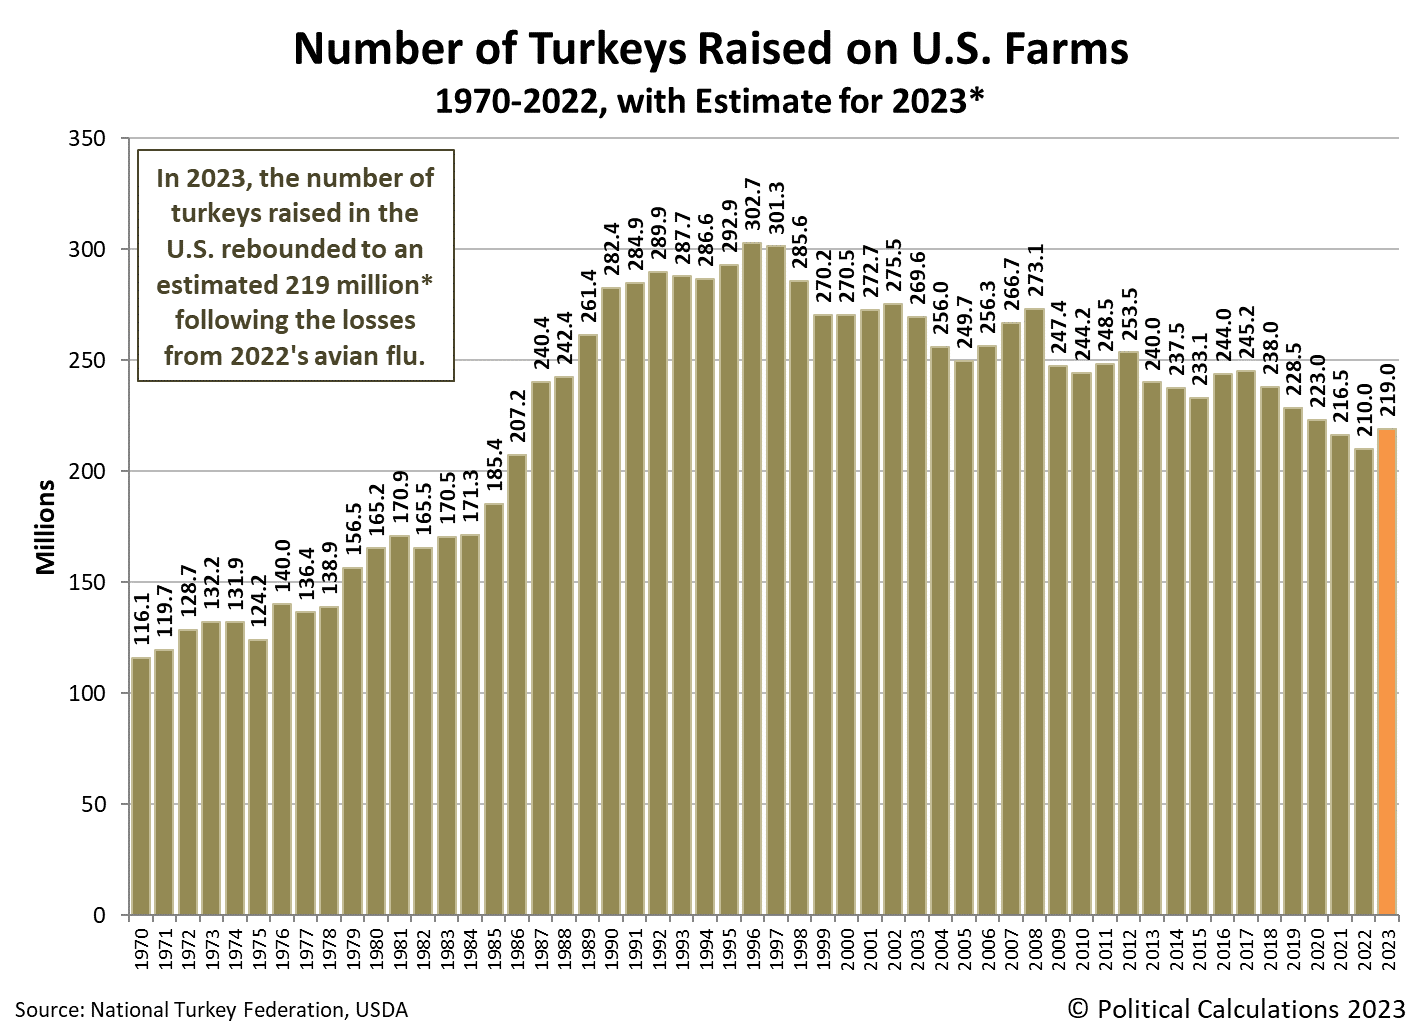 Number of Turkeys Raised on U.S. Farms, 1970-2022 with Estimate for 2023